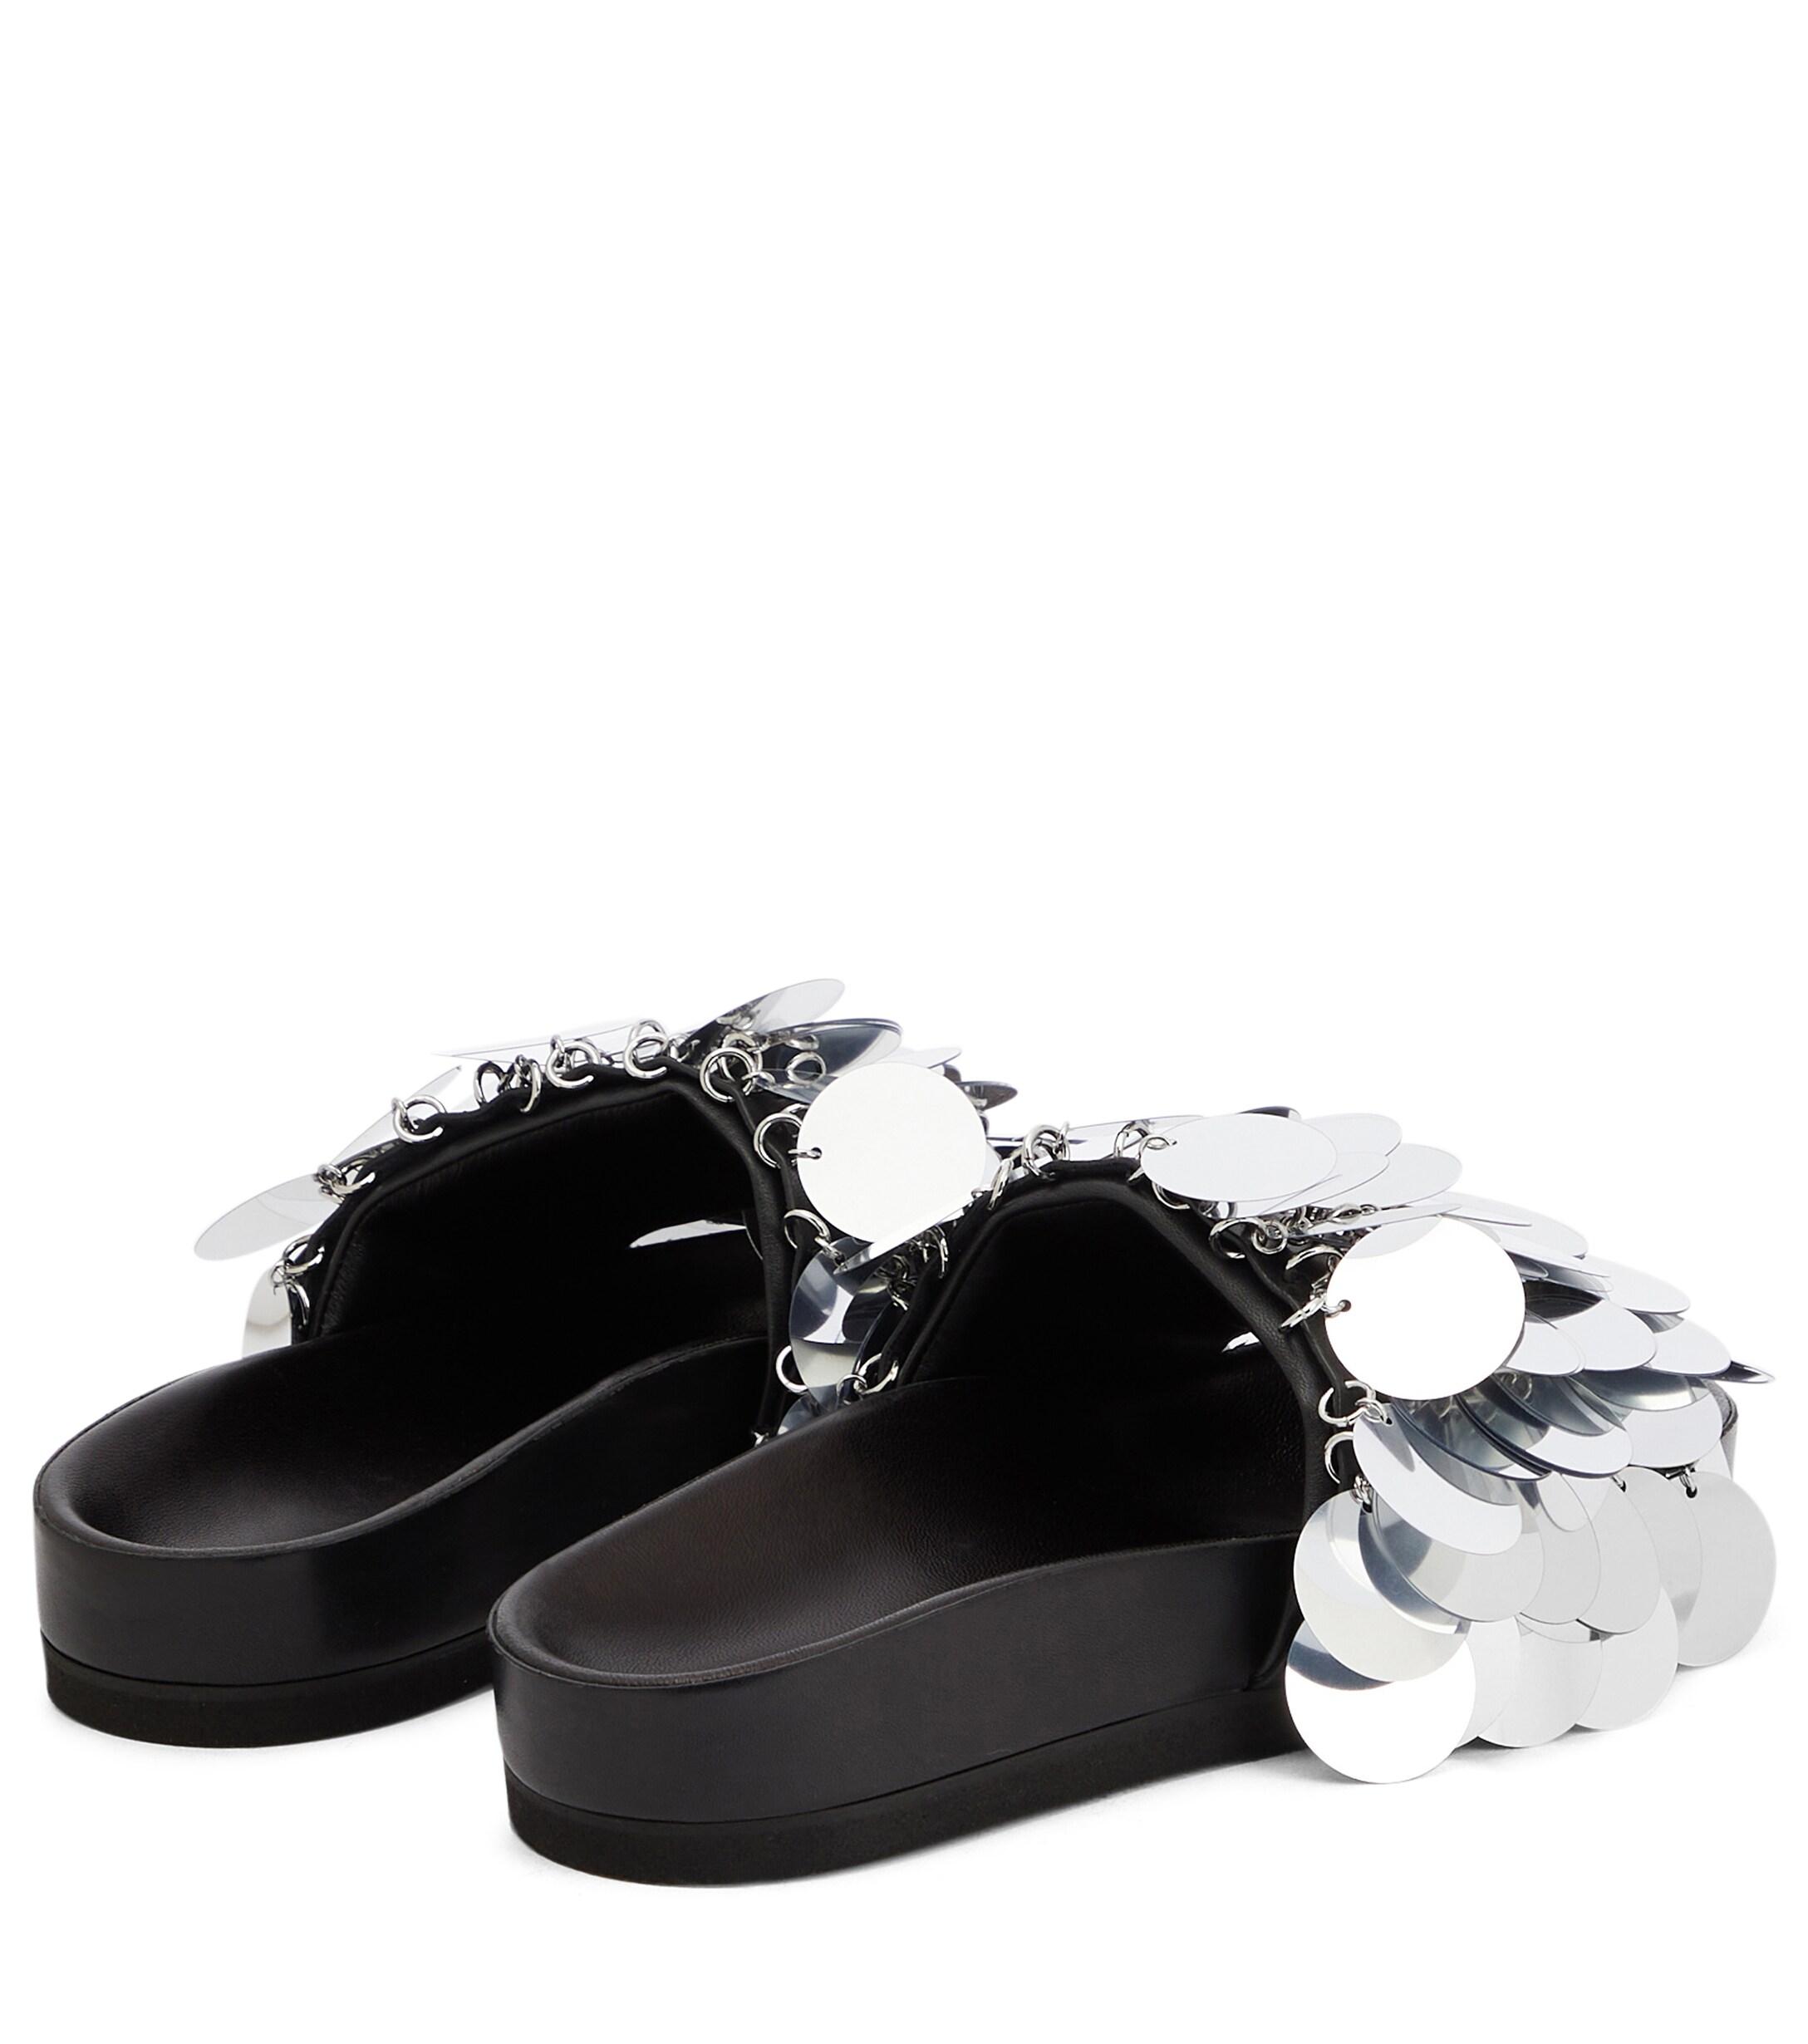 Tongs XL Link en cuir Cuir Paco Rabanne en coloris Noir Femme Chaussures plates Chaussures plates Paco Rabanne 